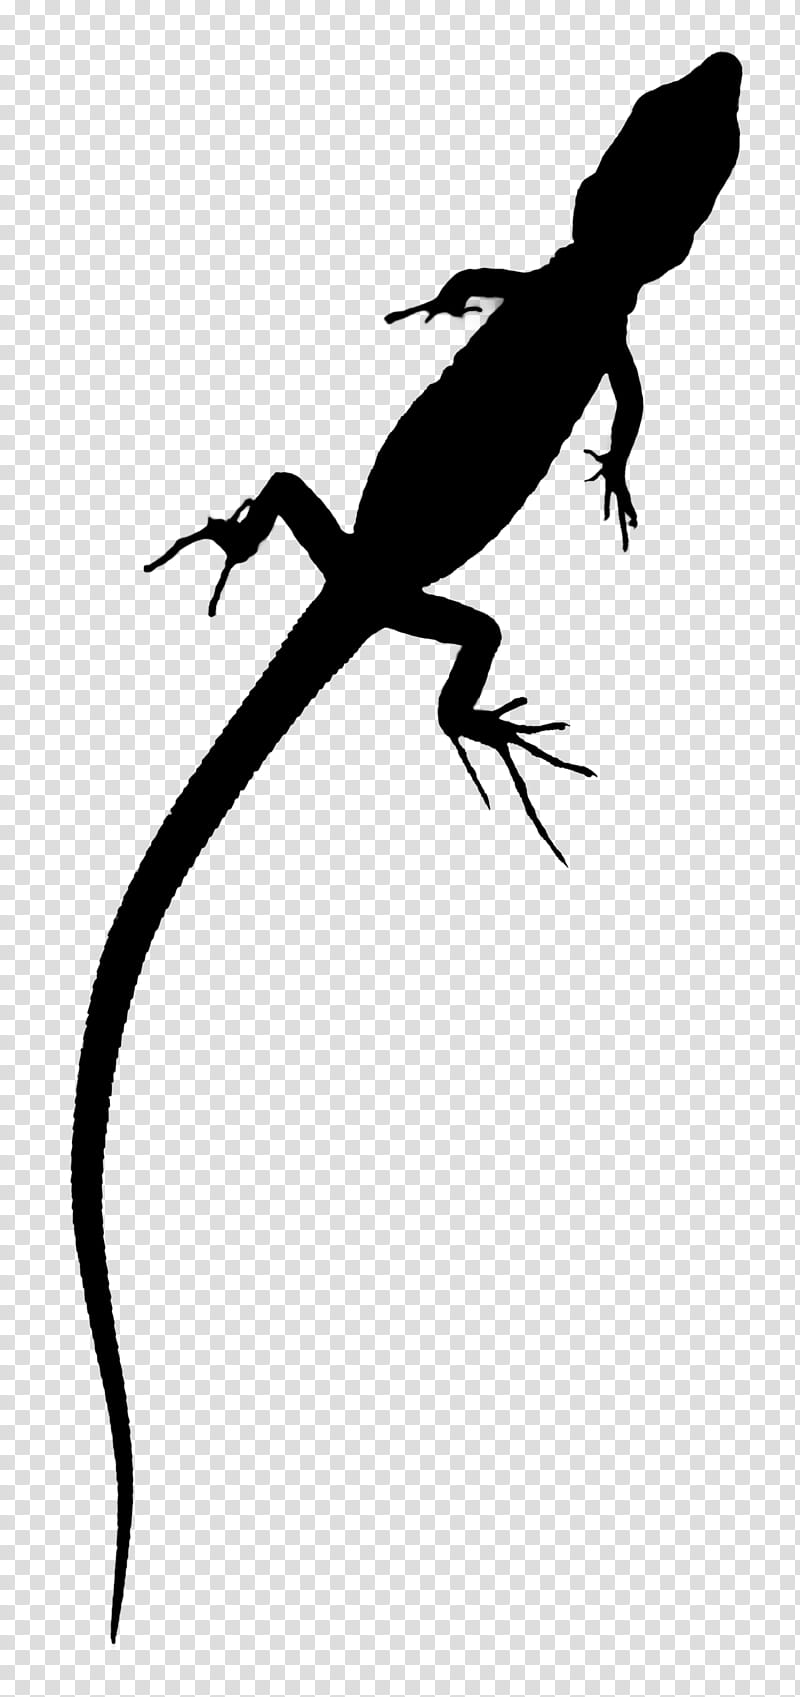 Lizard Lizard, Amphibians, Line, Silhouette, Beak, Reptile, Scaled Reptile, Wall Lizard transparent background PNG clipart